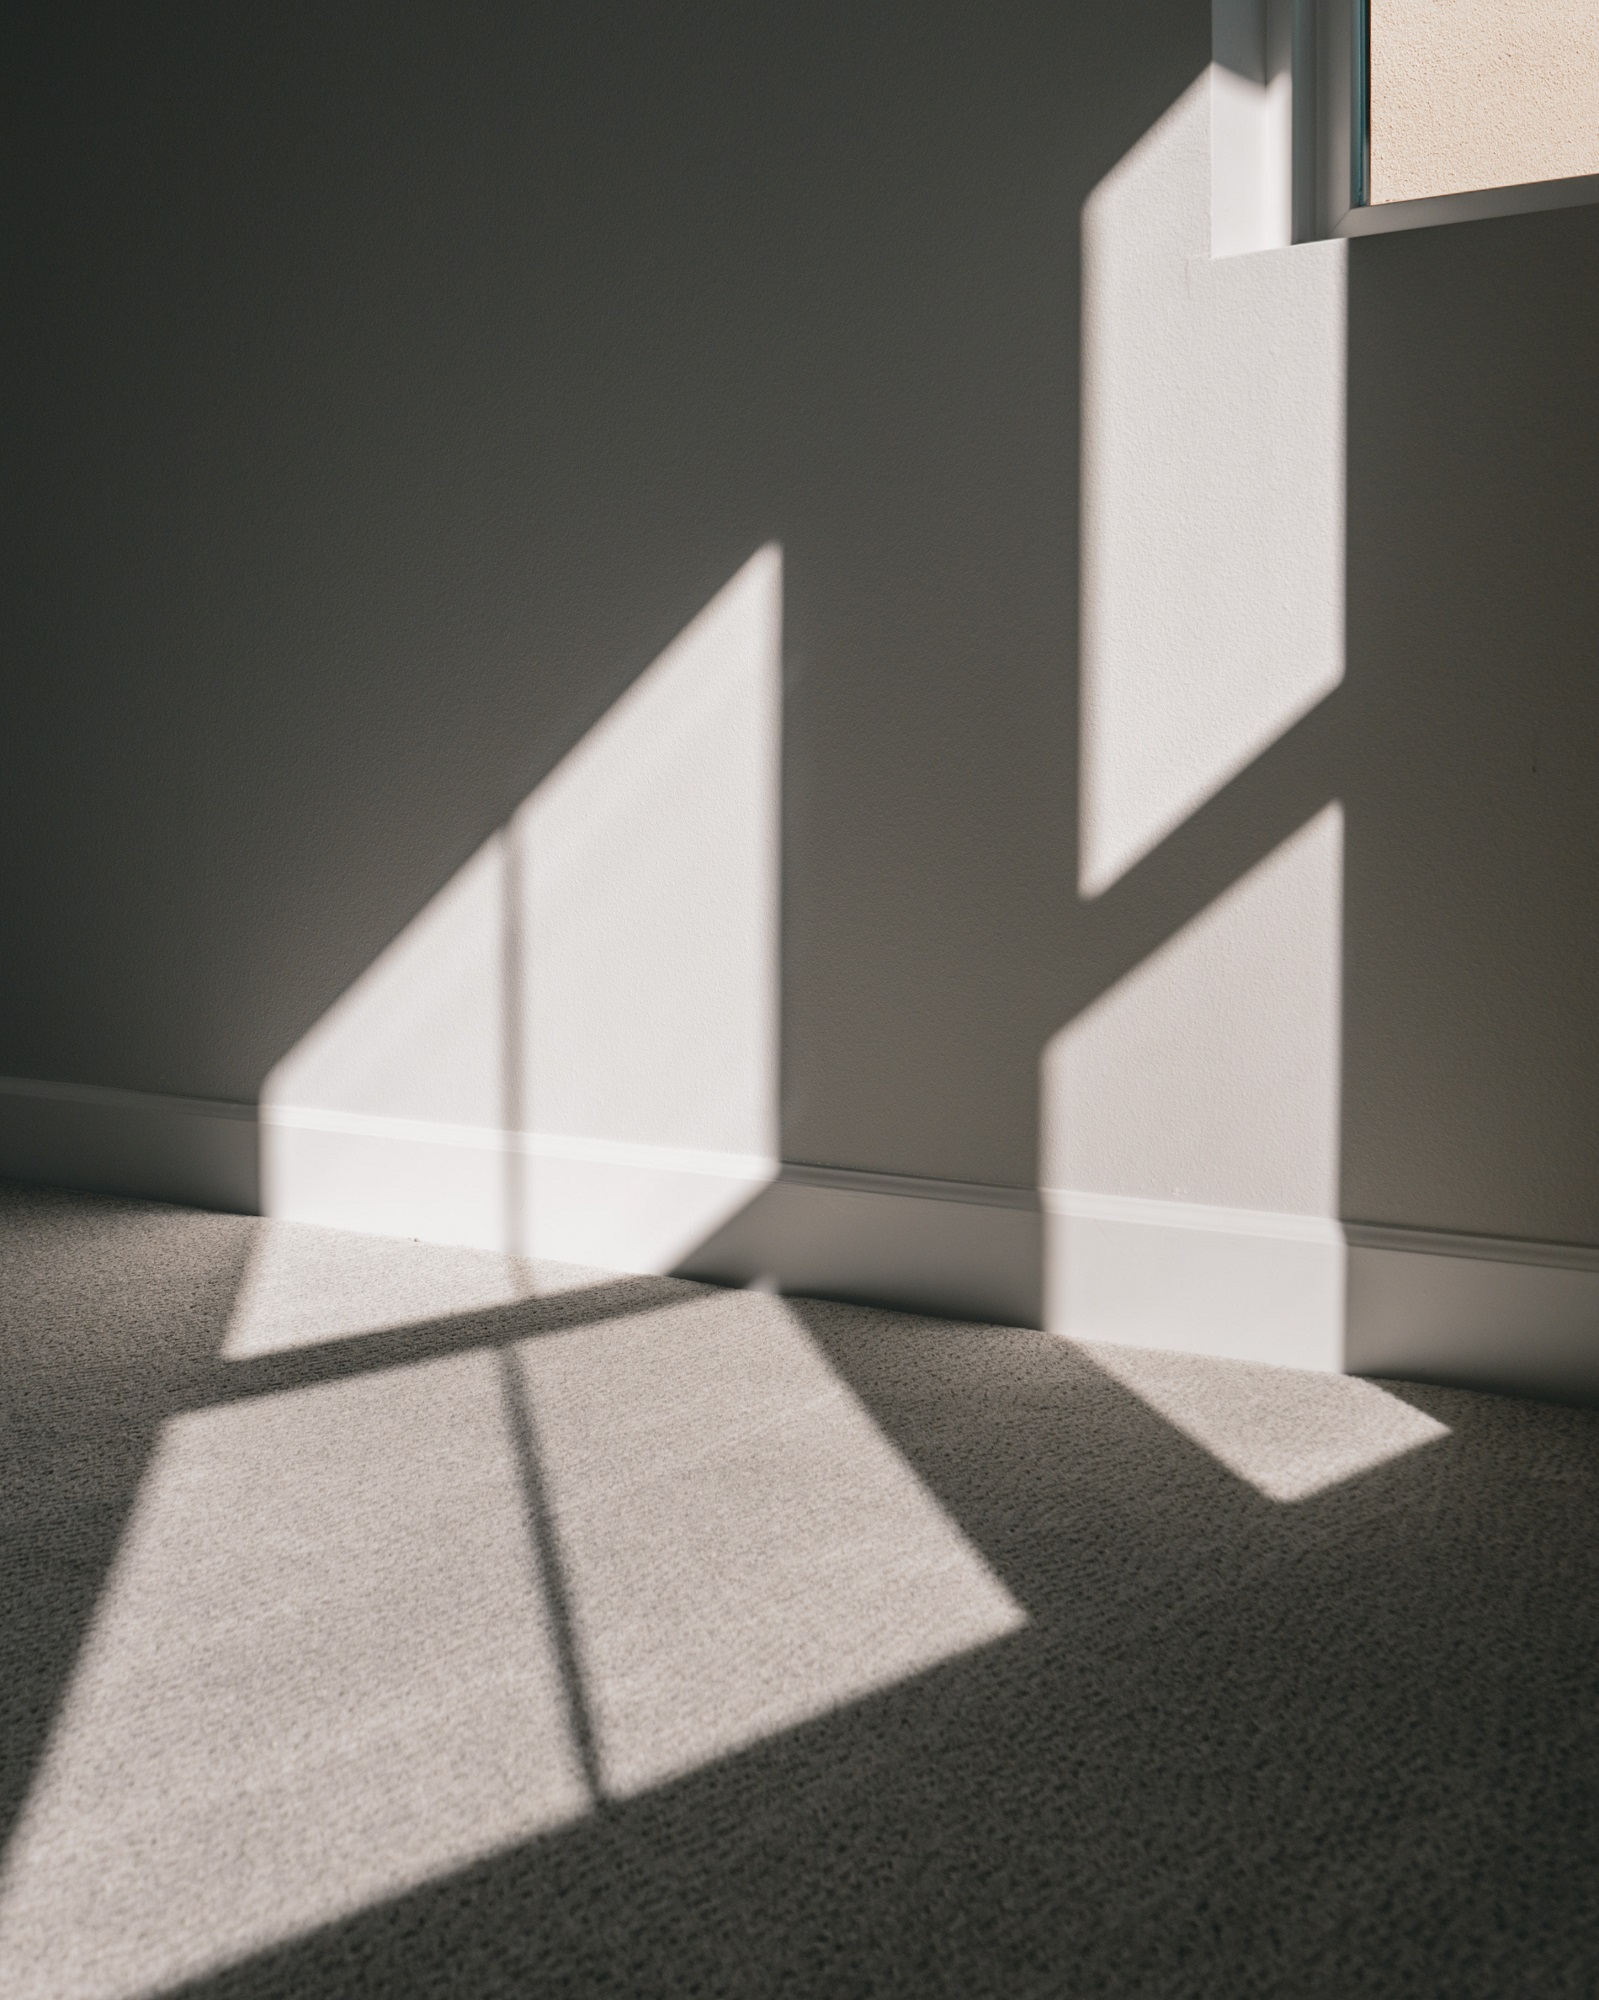 Image of sunlight through an energy efficient window